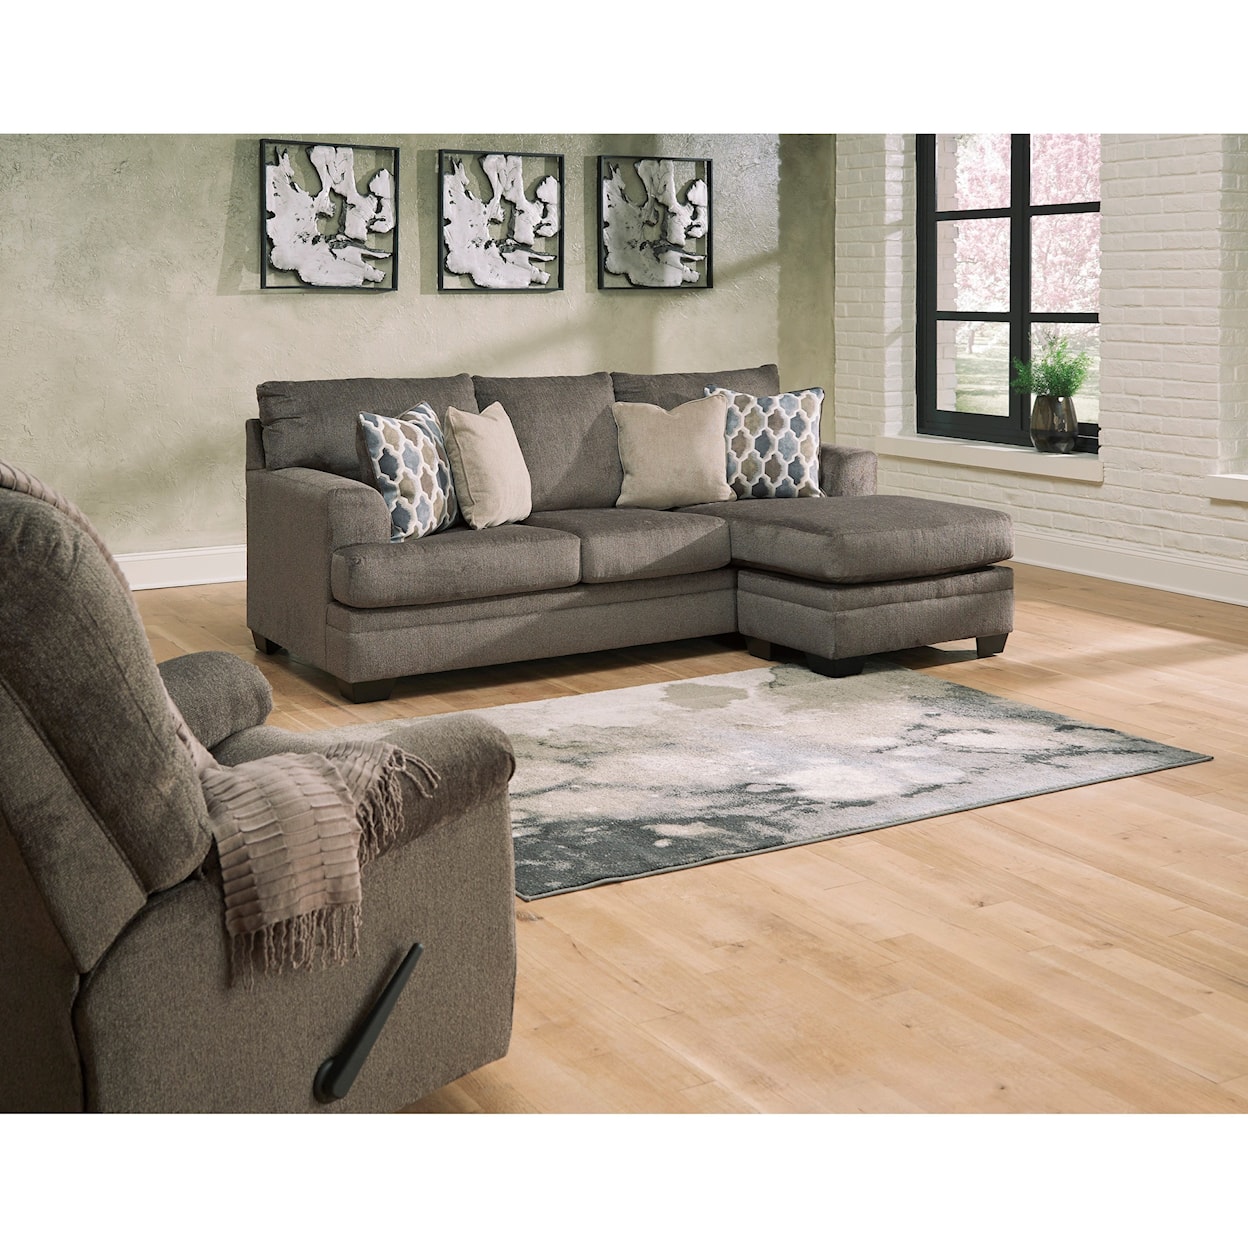 Ashley Furniture Signature Design Dorsten Stationary Living Room Group